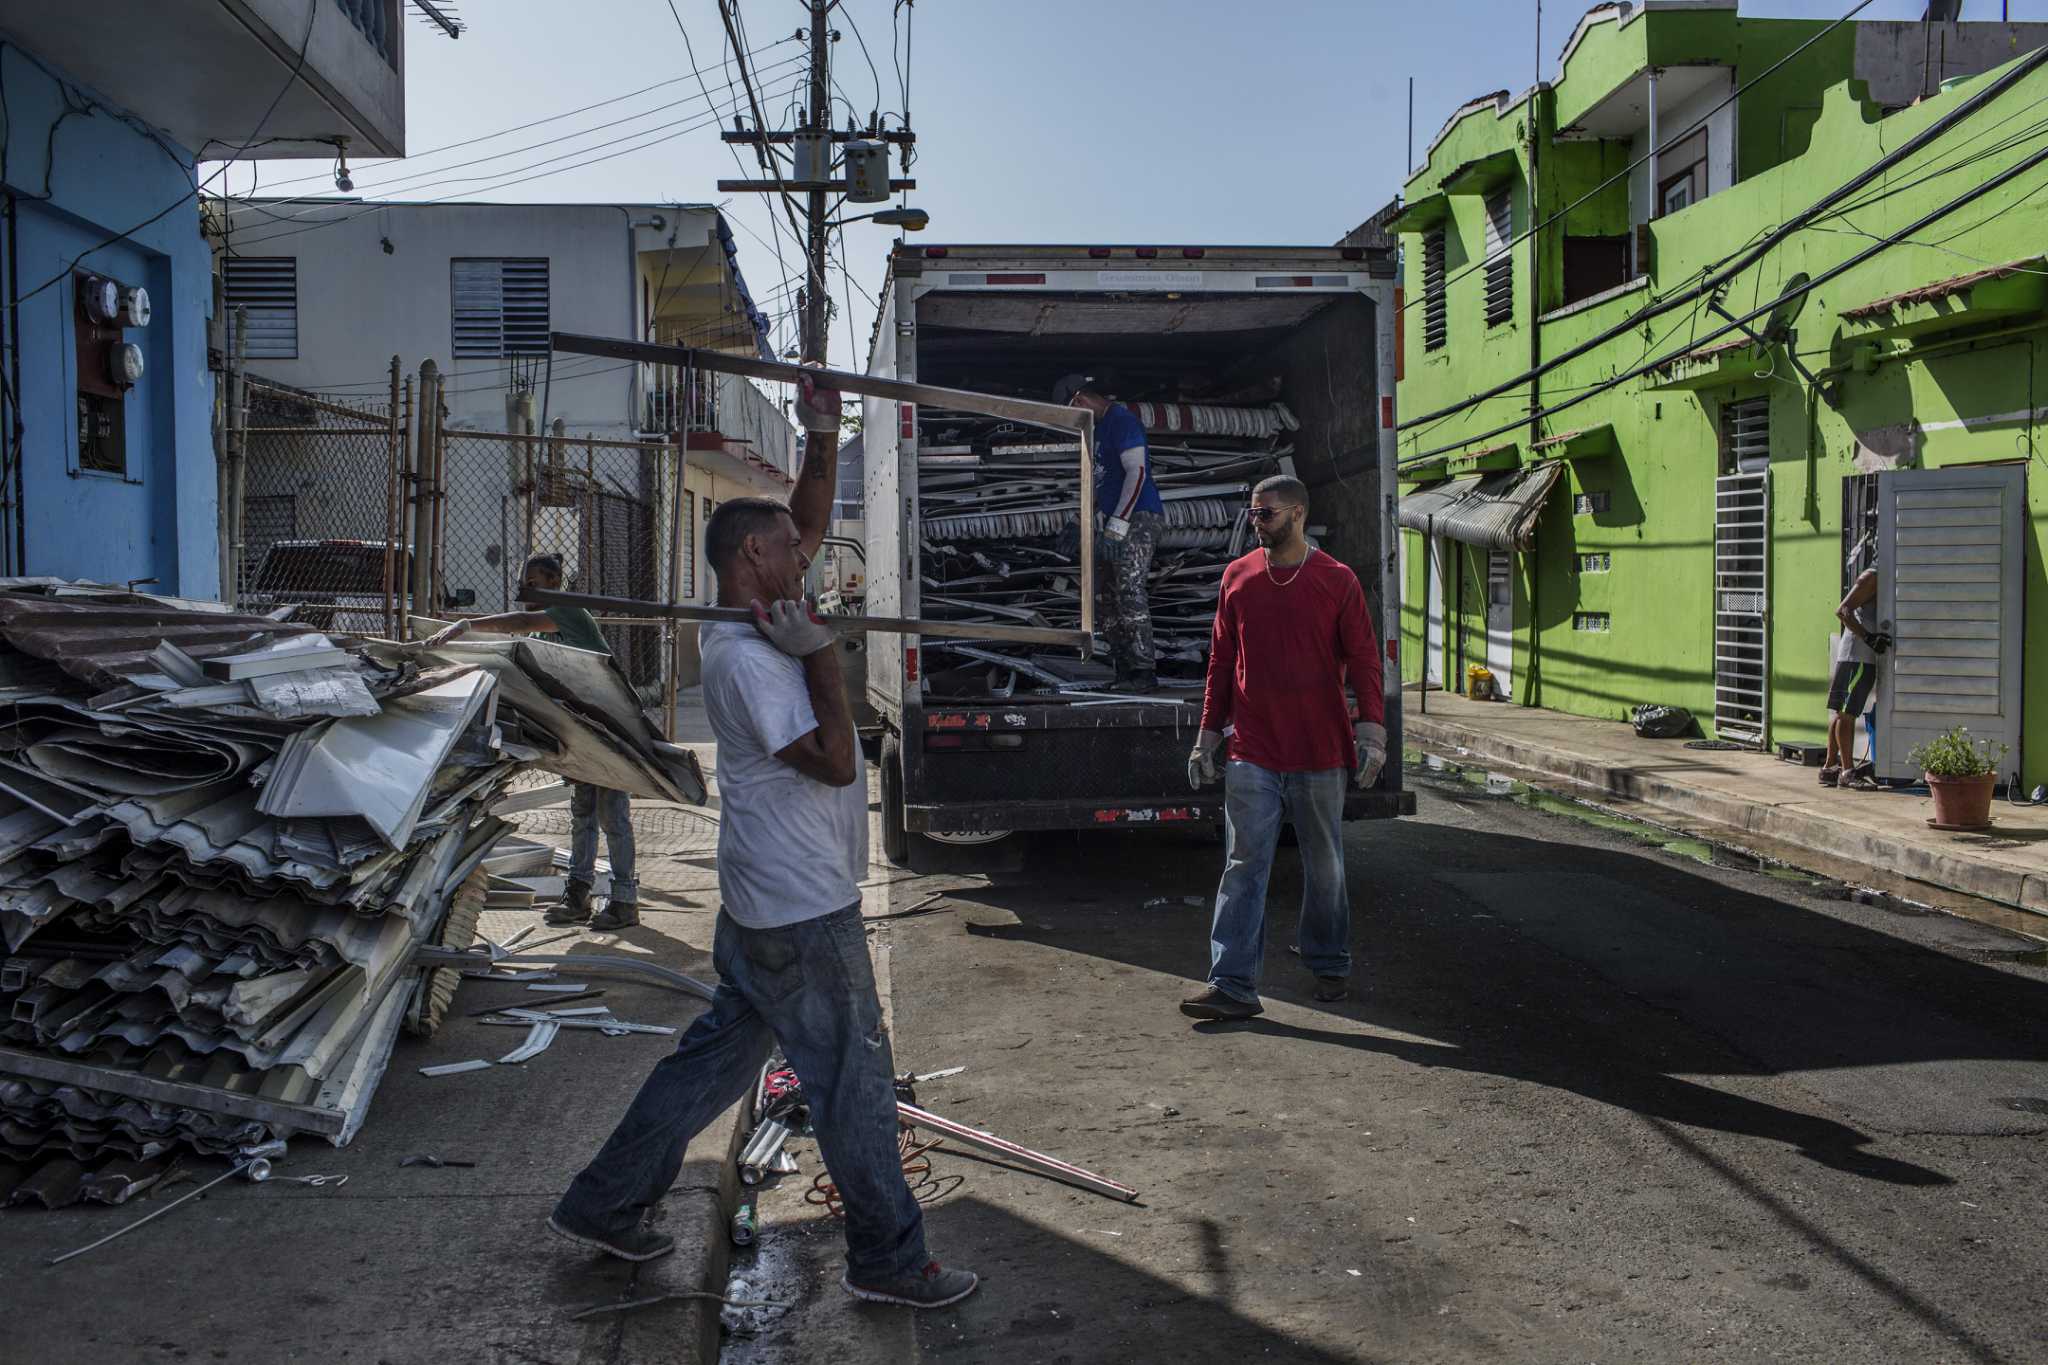 greenwich brings relief to puerto rico